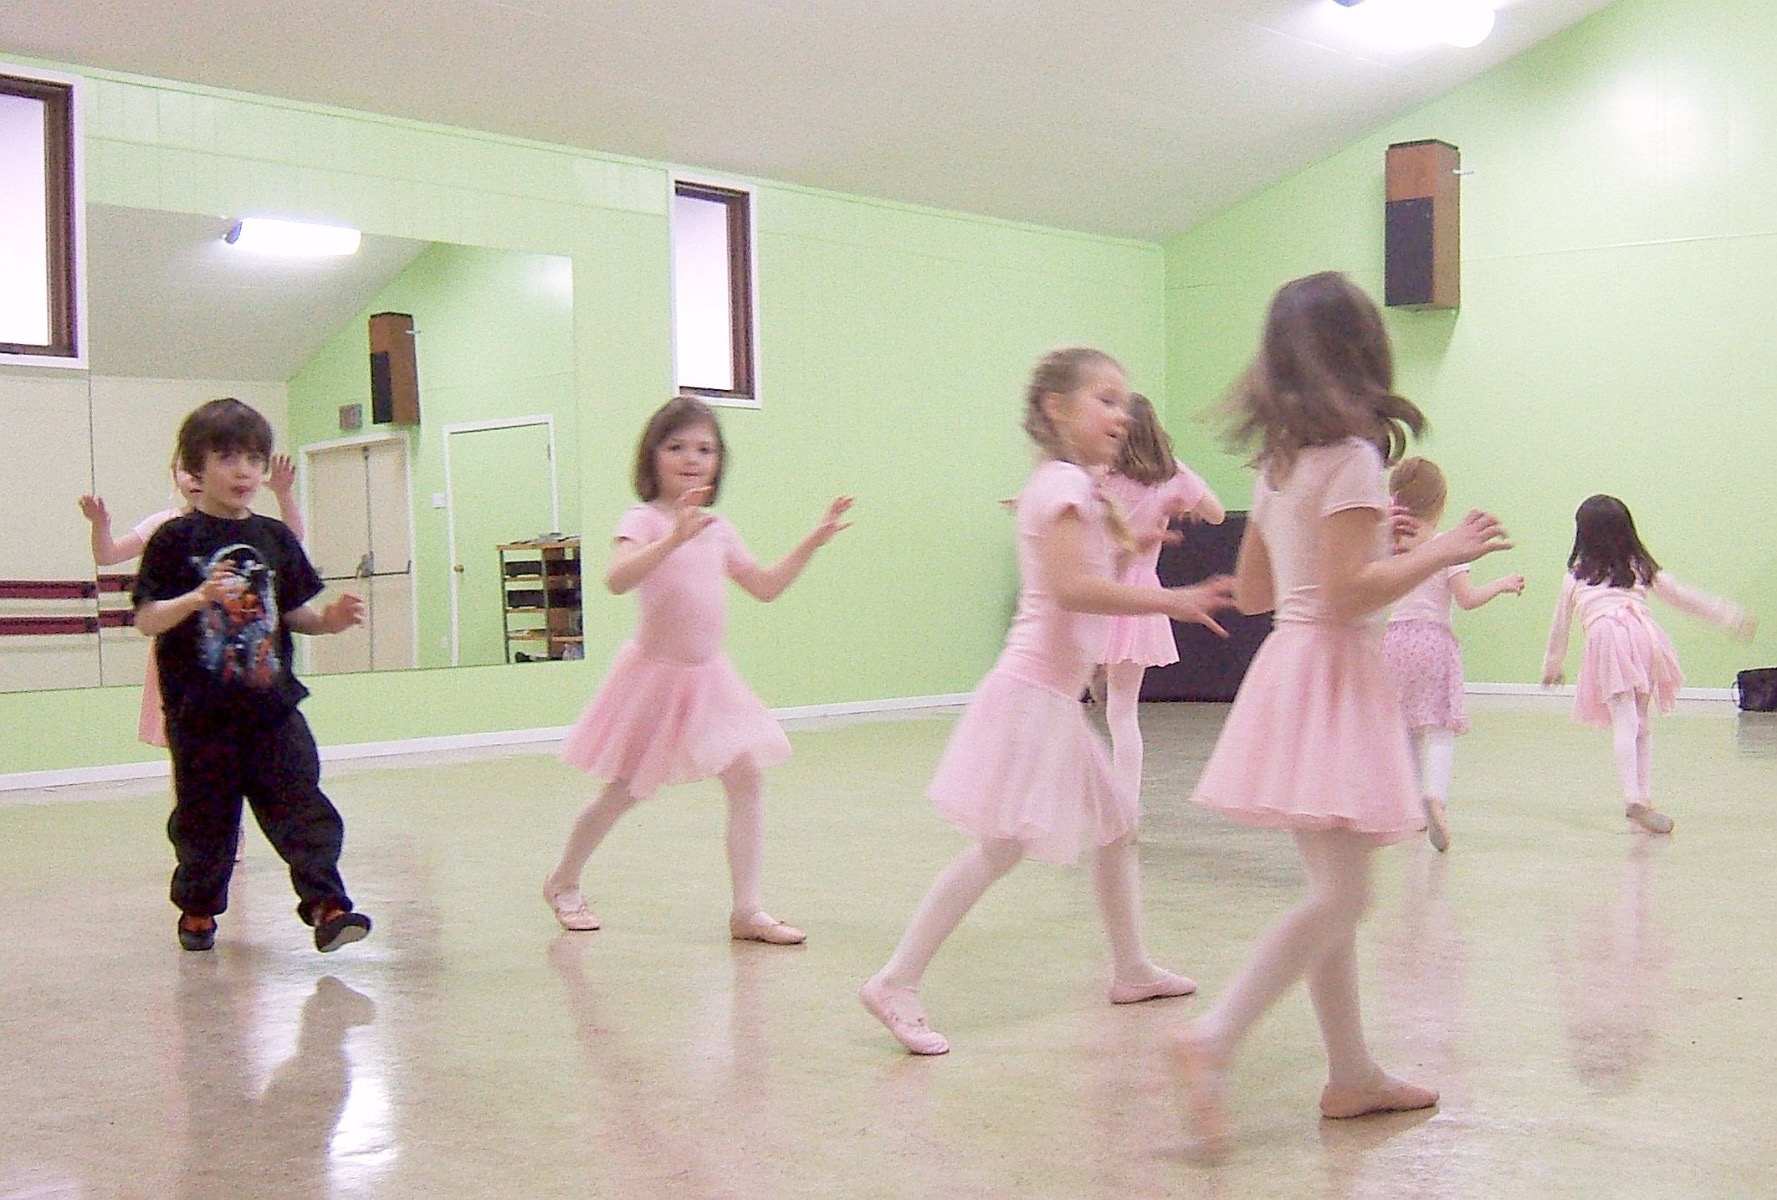 A little boy in black dances with lots of little girls in pink